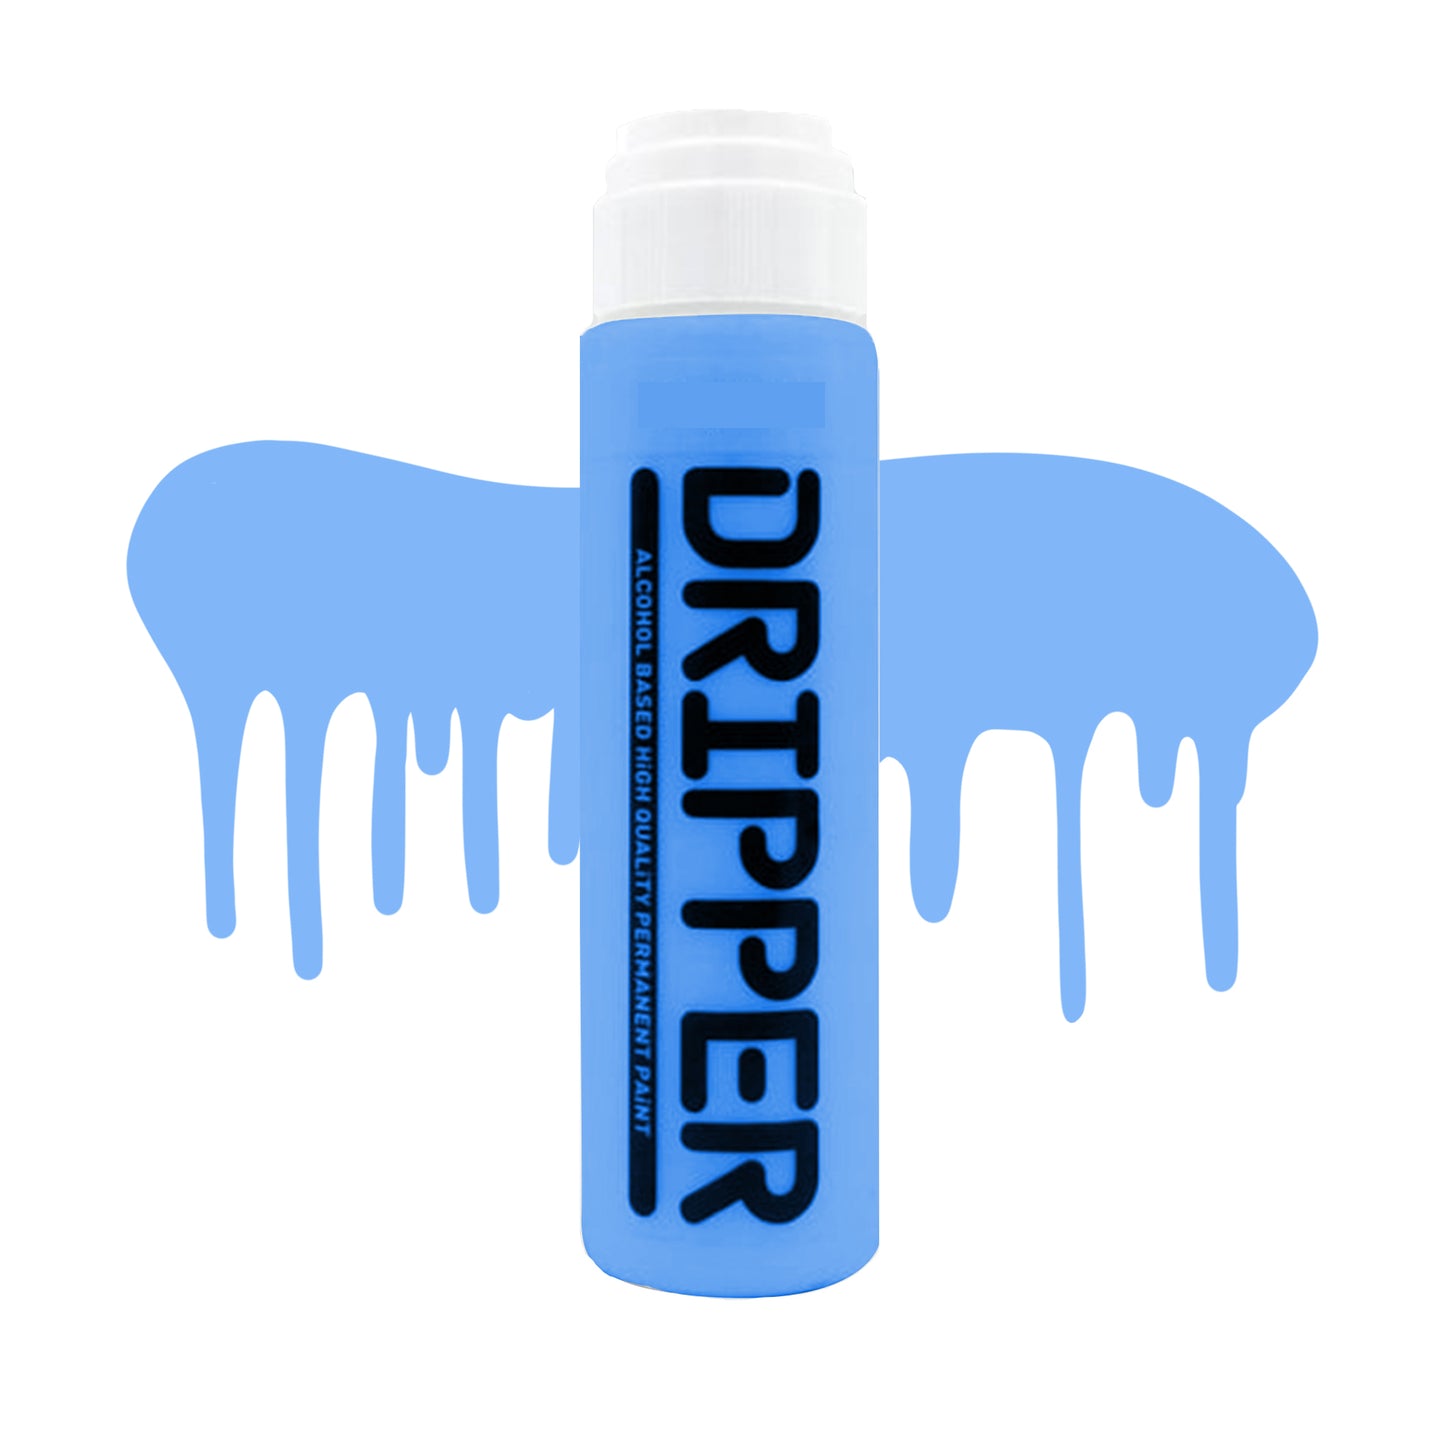 Dope Paint, Graffiti Squeeze Dripper Mop Marker in light blue.